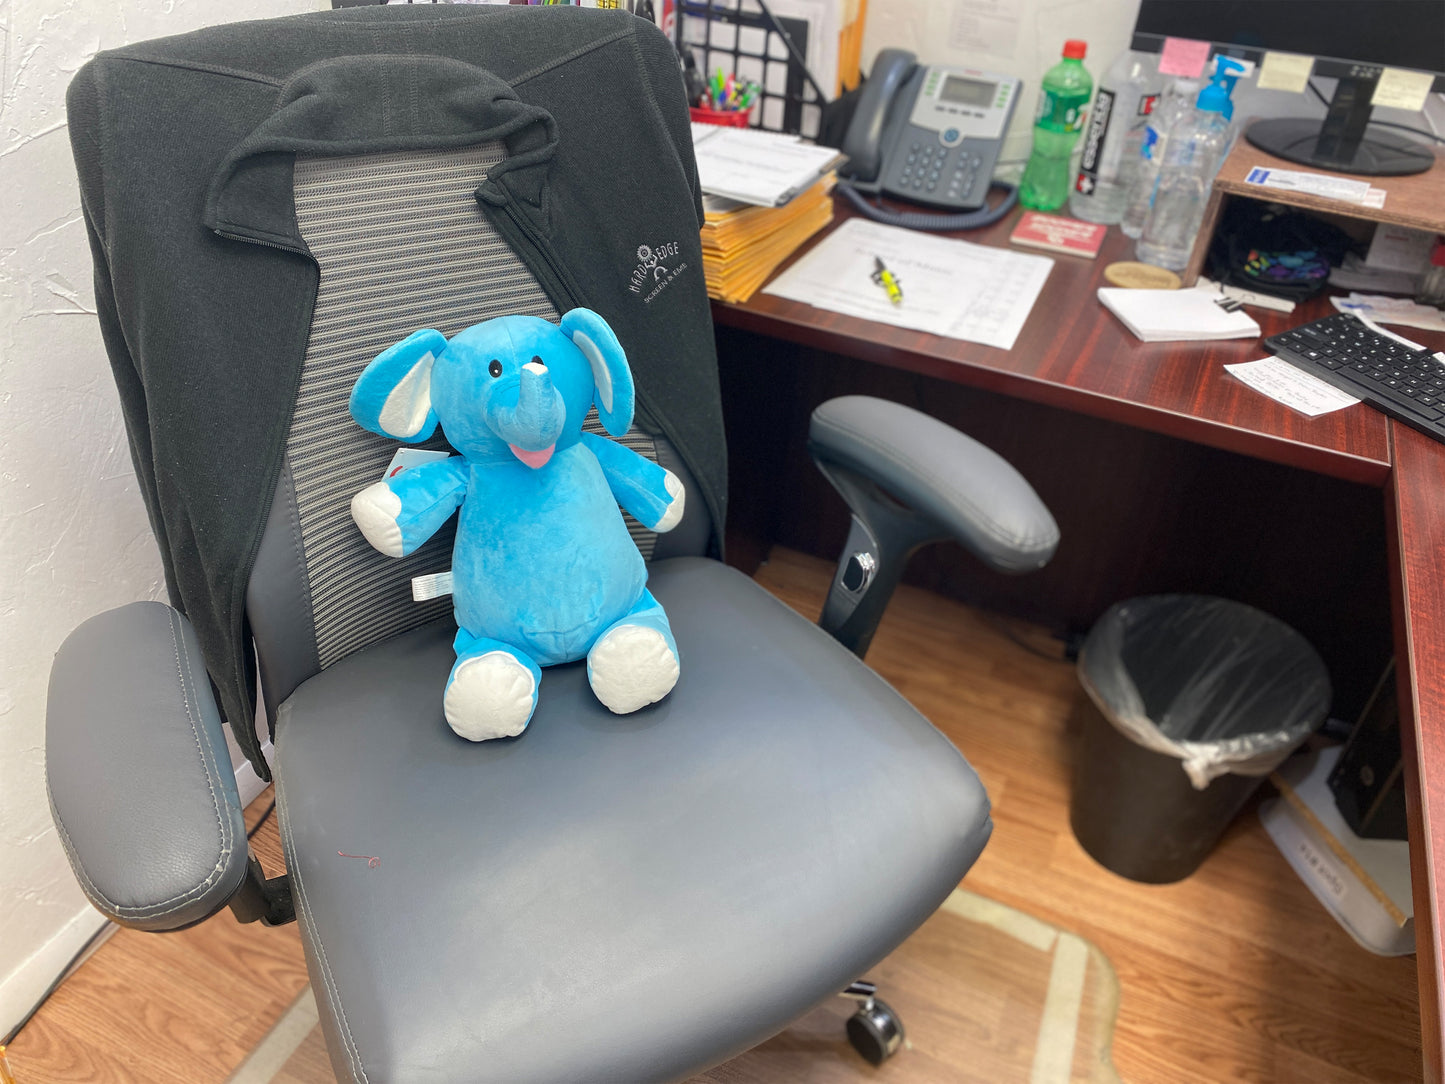 Personalized Stuffed Blue Elephant